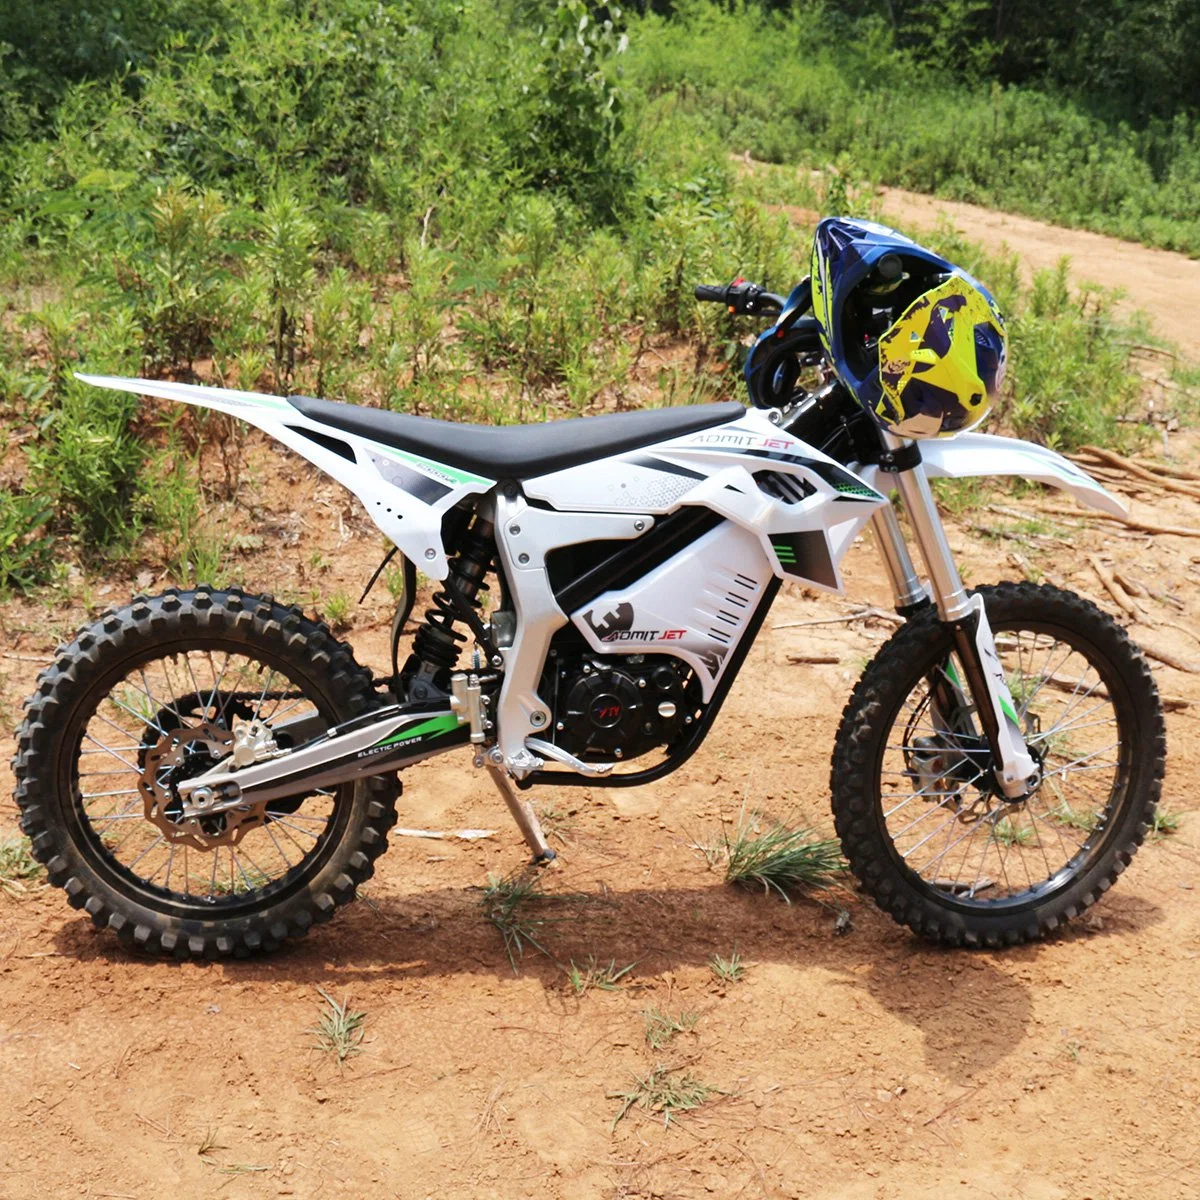 Potente Mountainbike Scrambler grasa de la montaña de neumáticos E Pit Dirt Bike eléctrica bicicleta moto para adultos